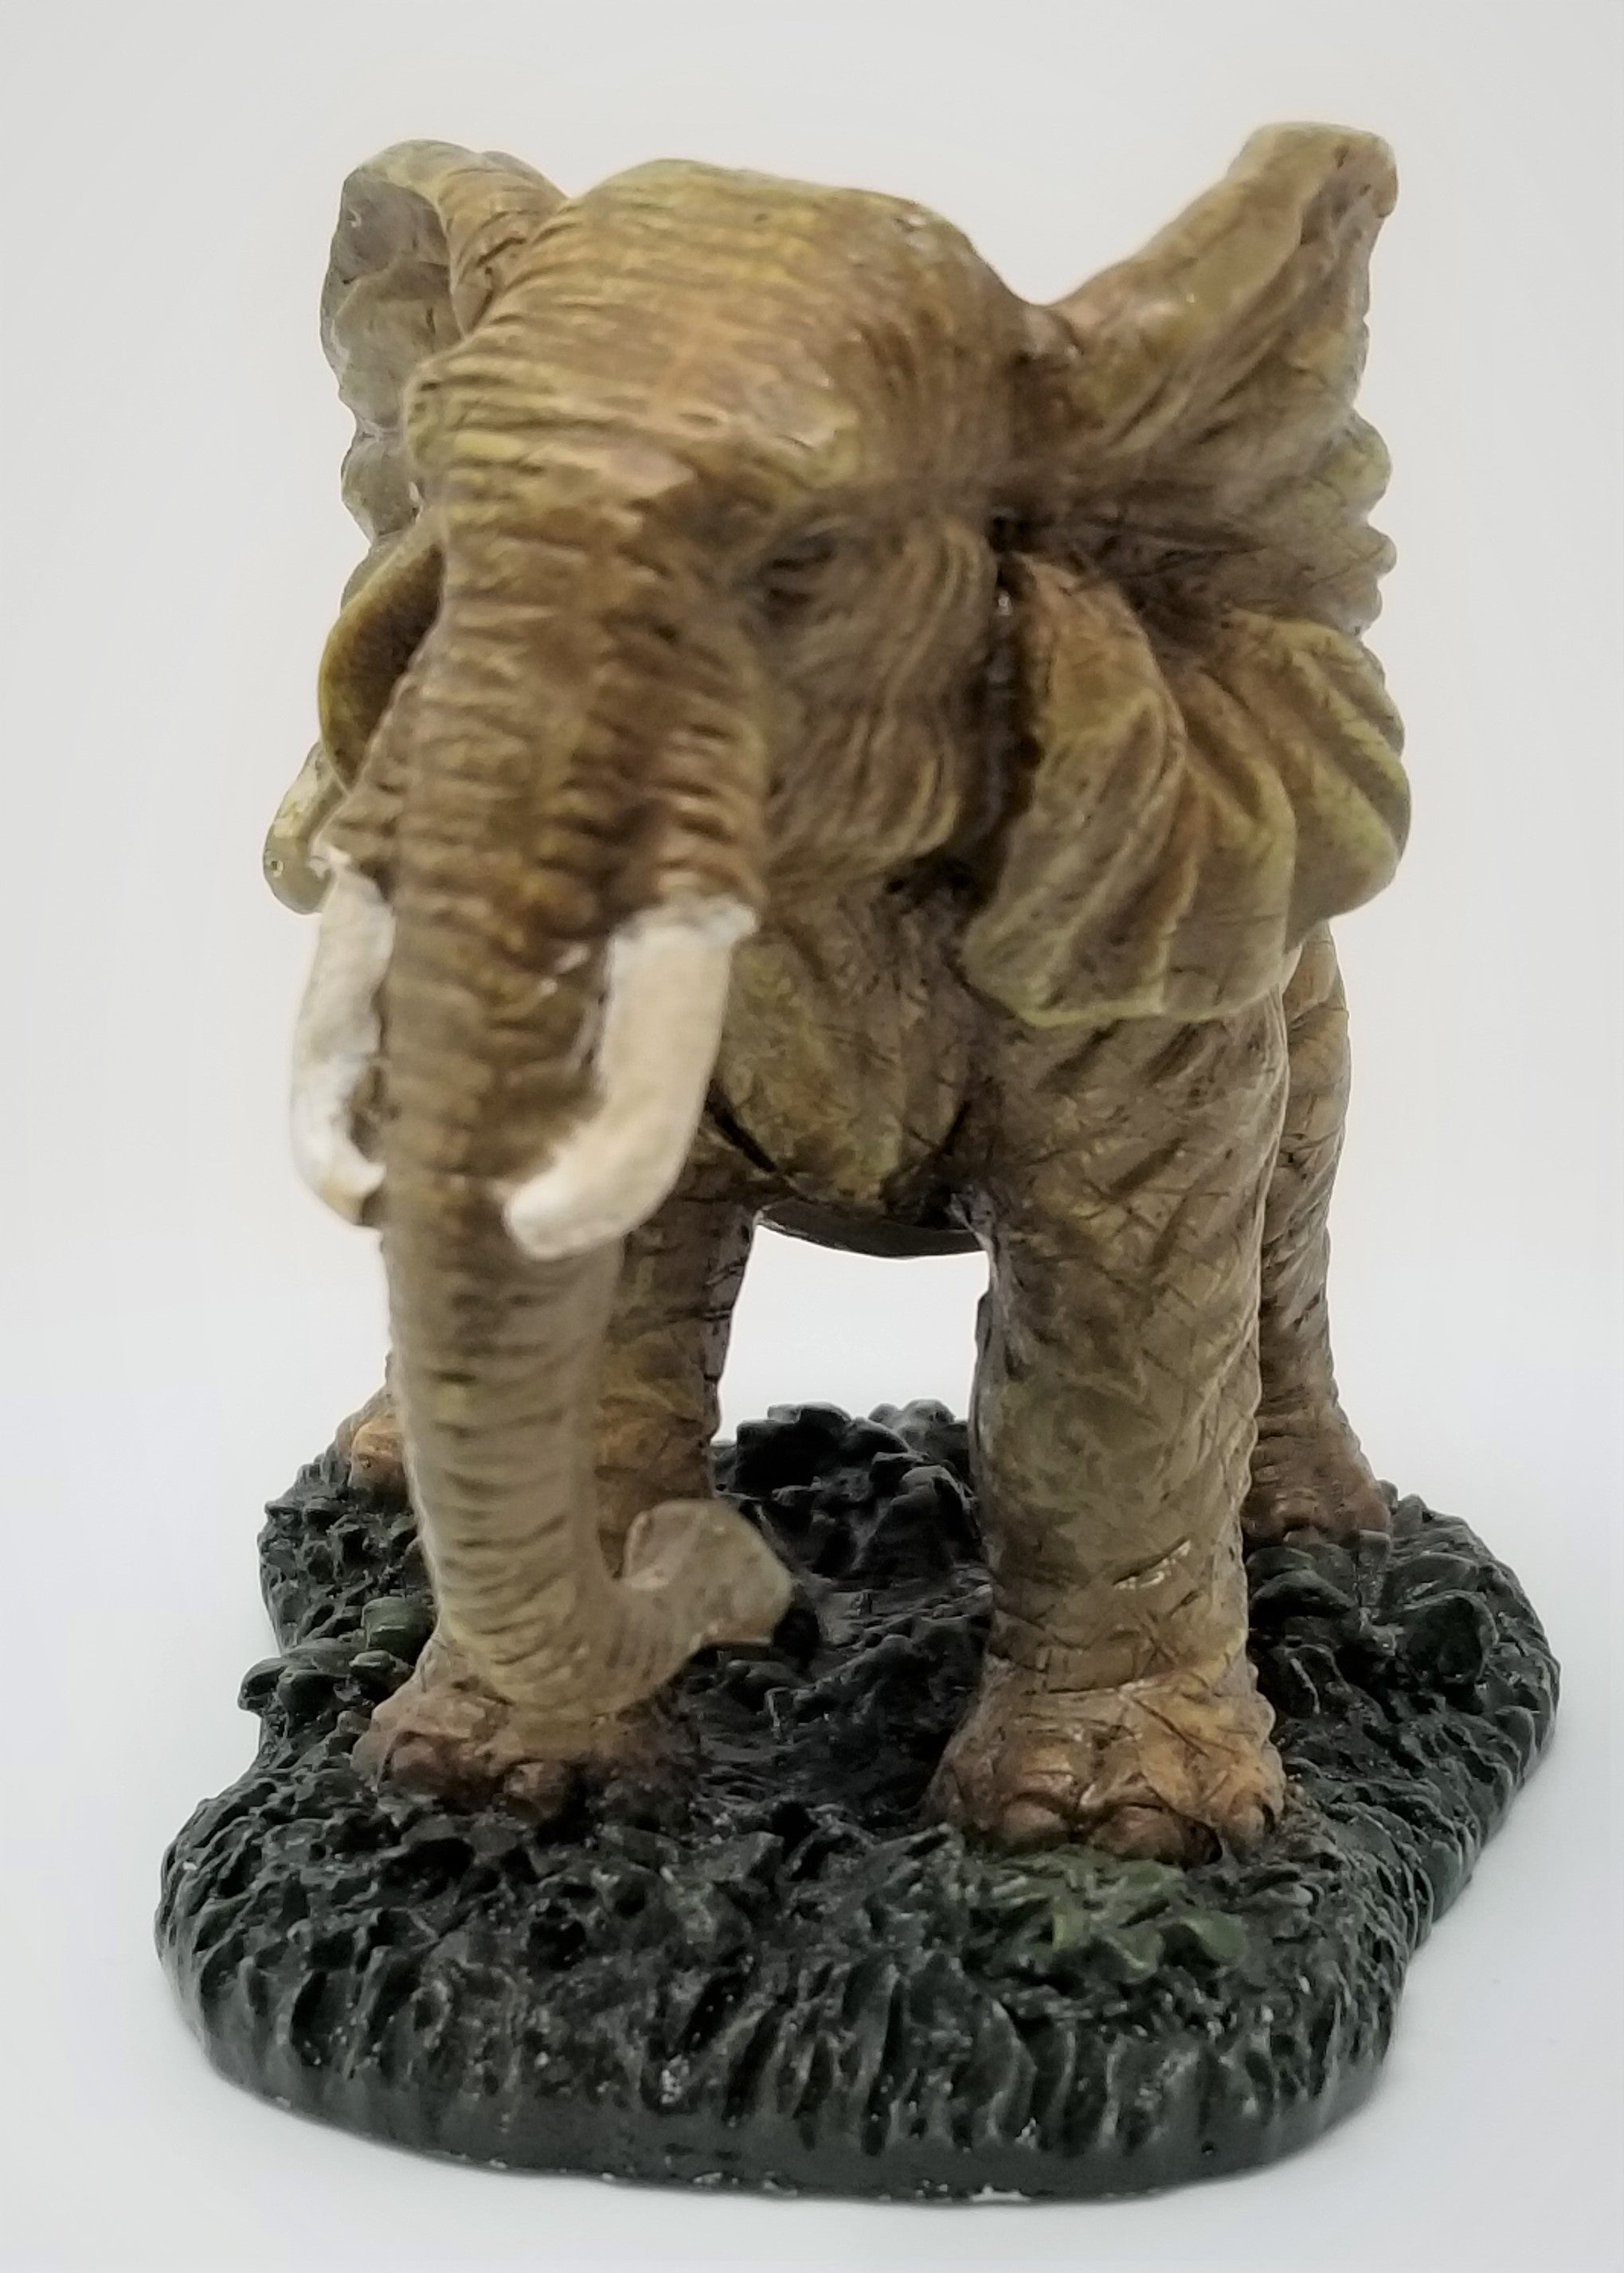 Handsome Vintage Elephant Figurine Small Wildlife